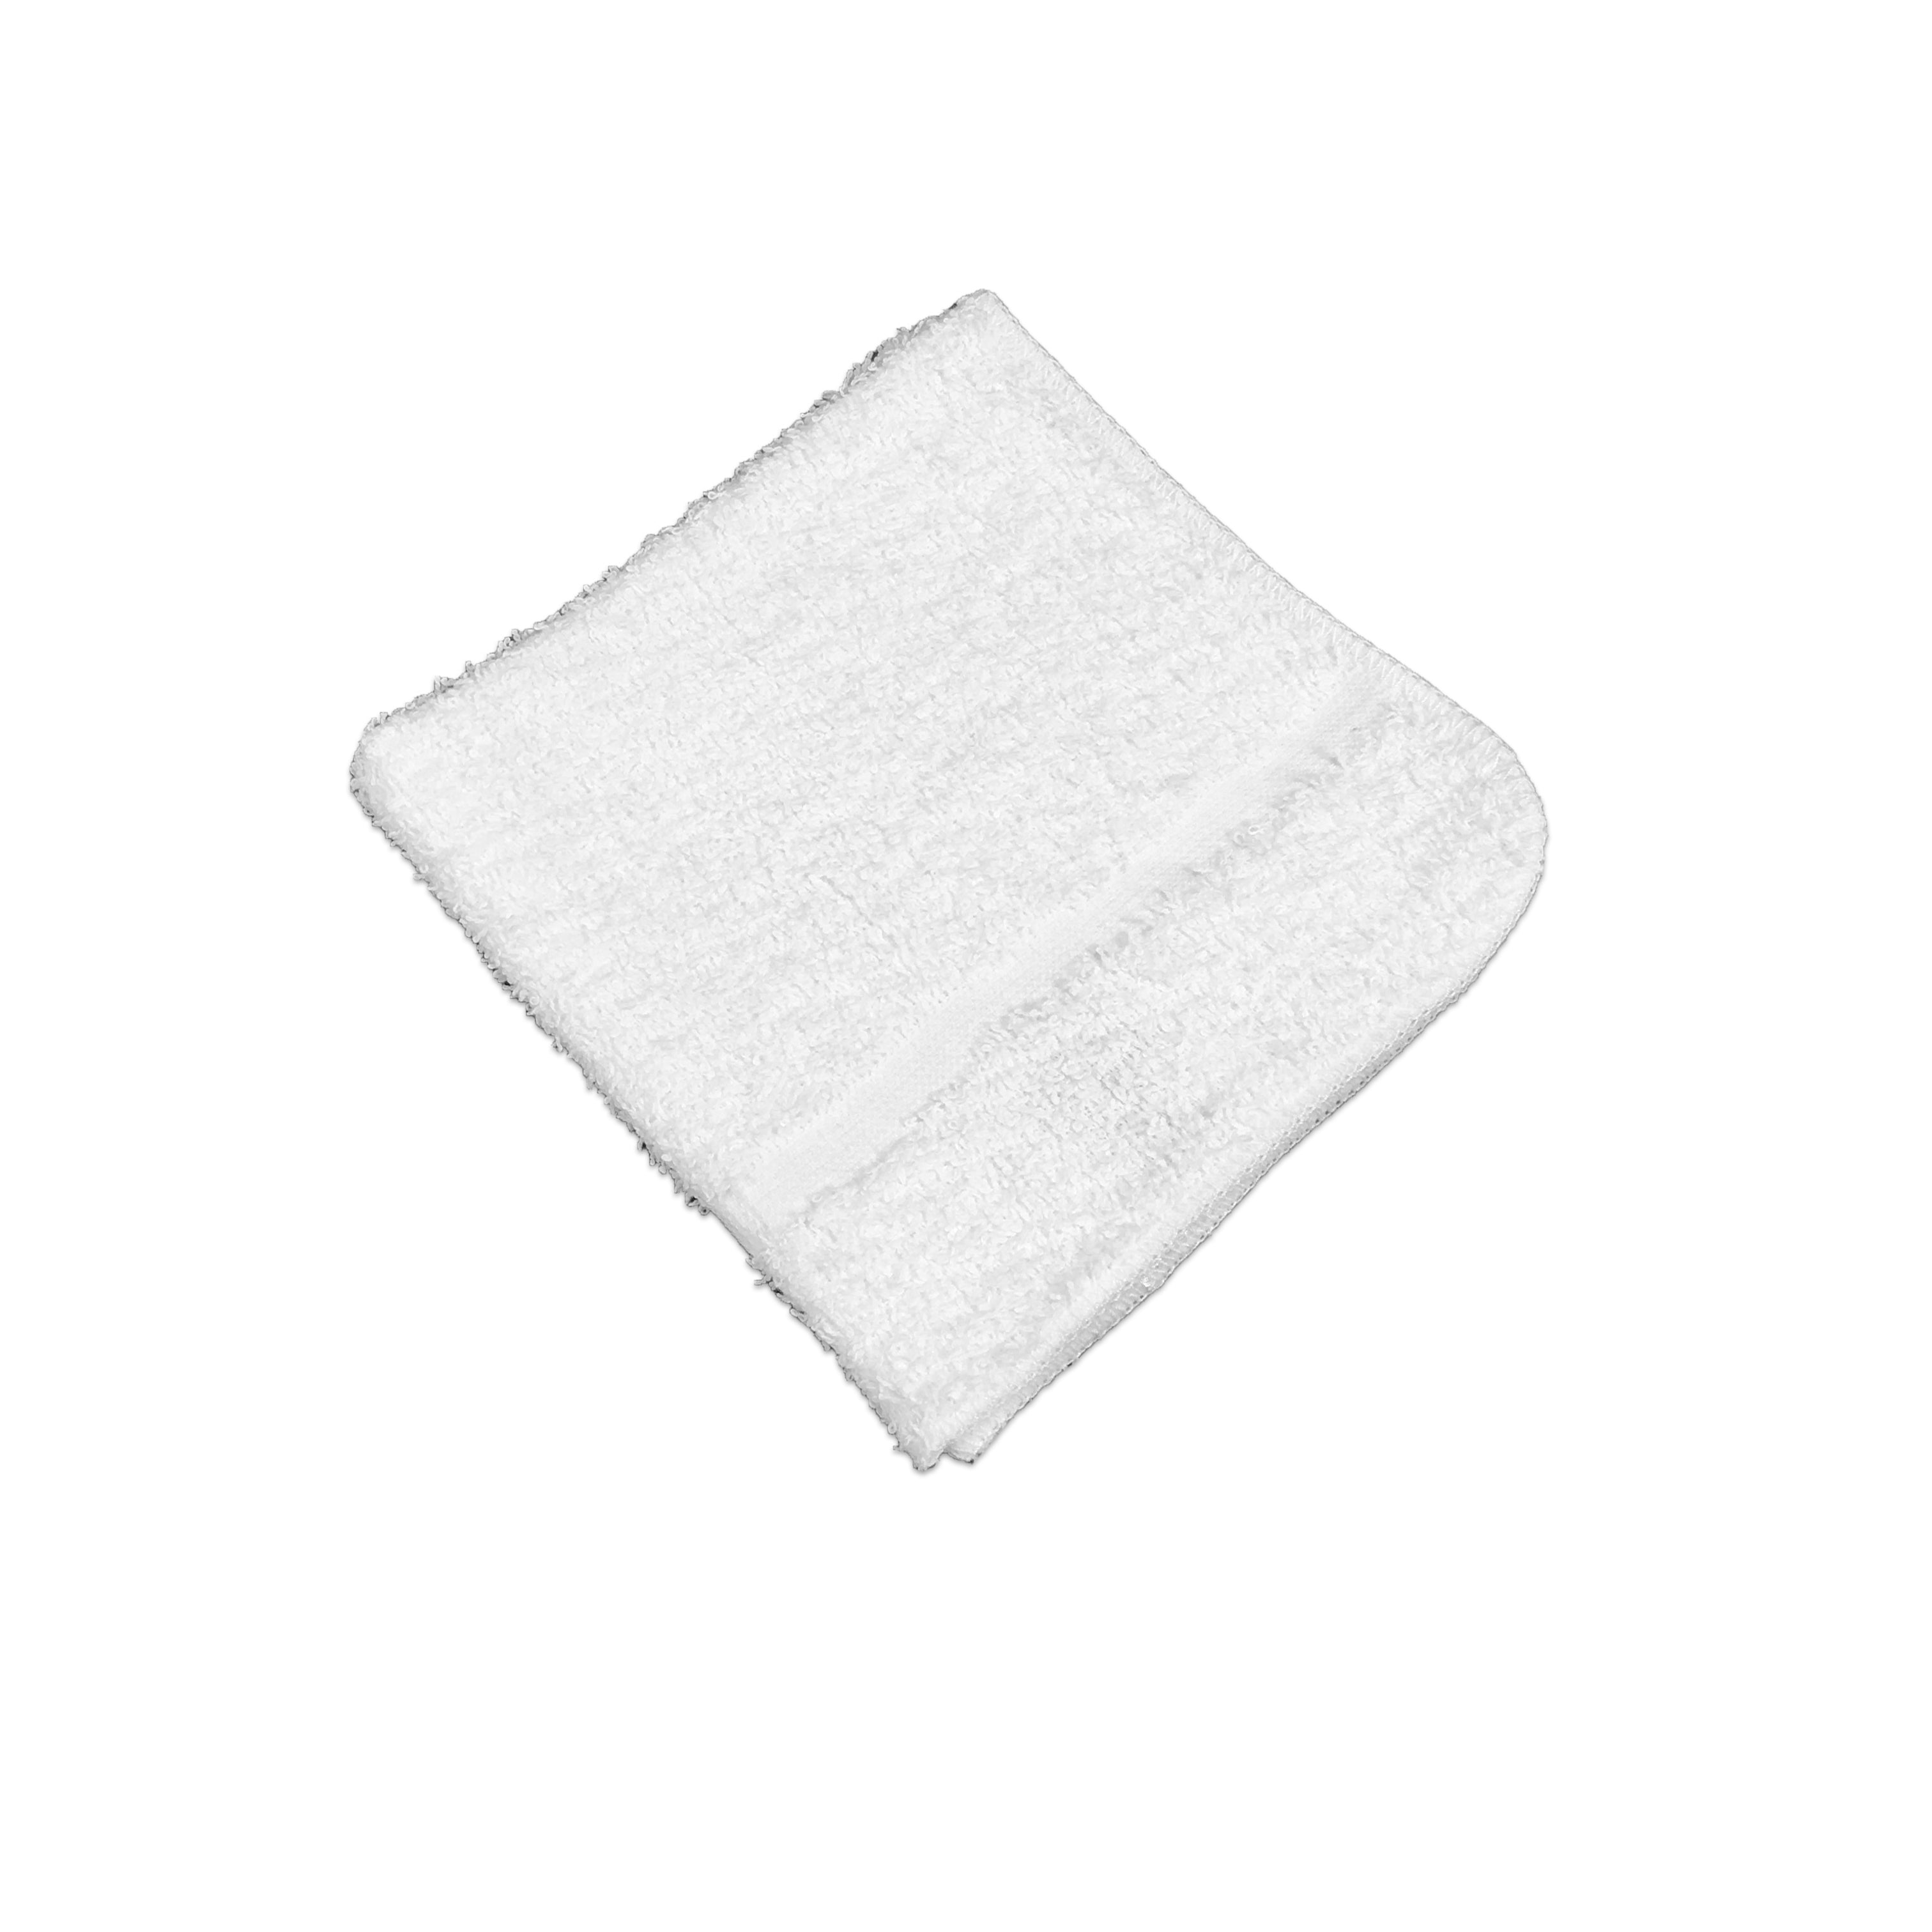 Washcloth Kitchen Towels Set 12x12 Cotton Blend Bulk Pack of 12,24